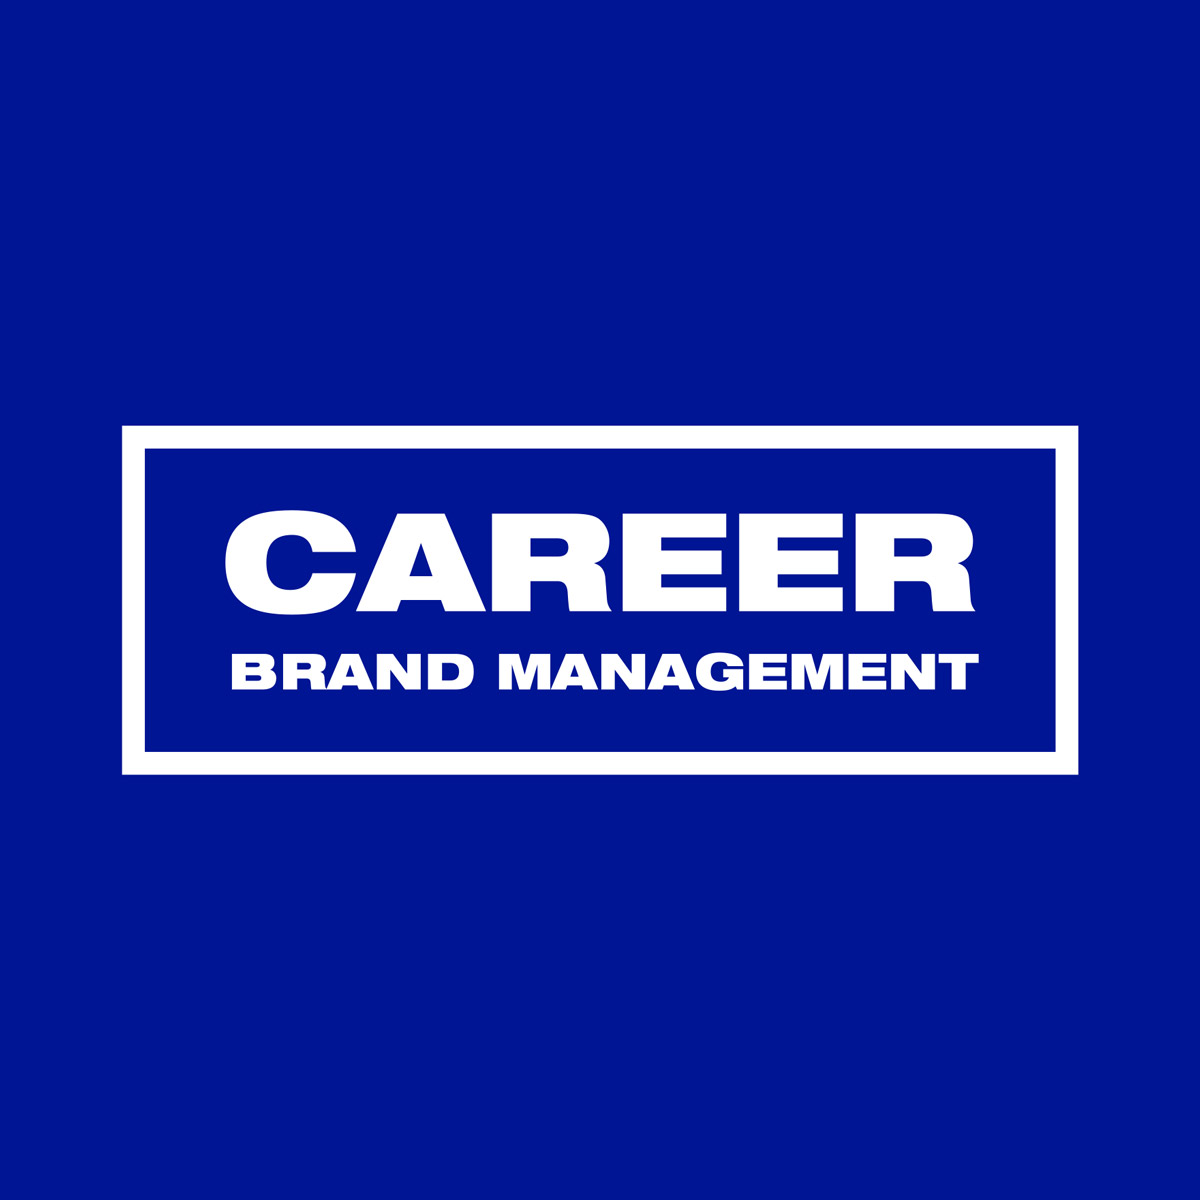 Career Brand